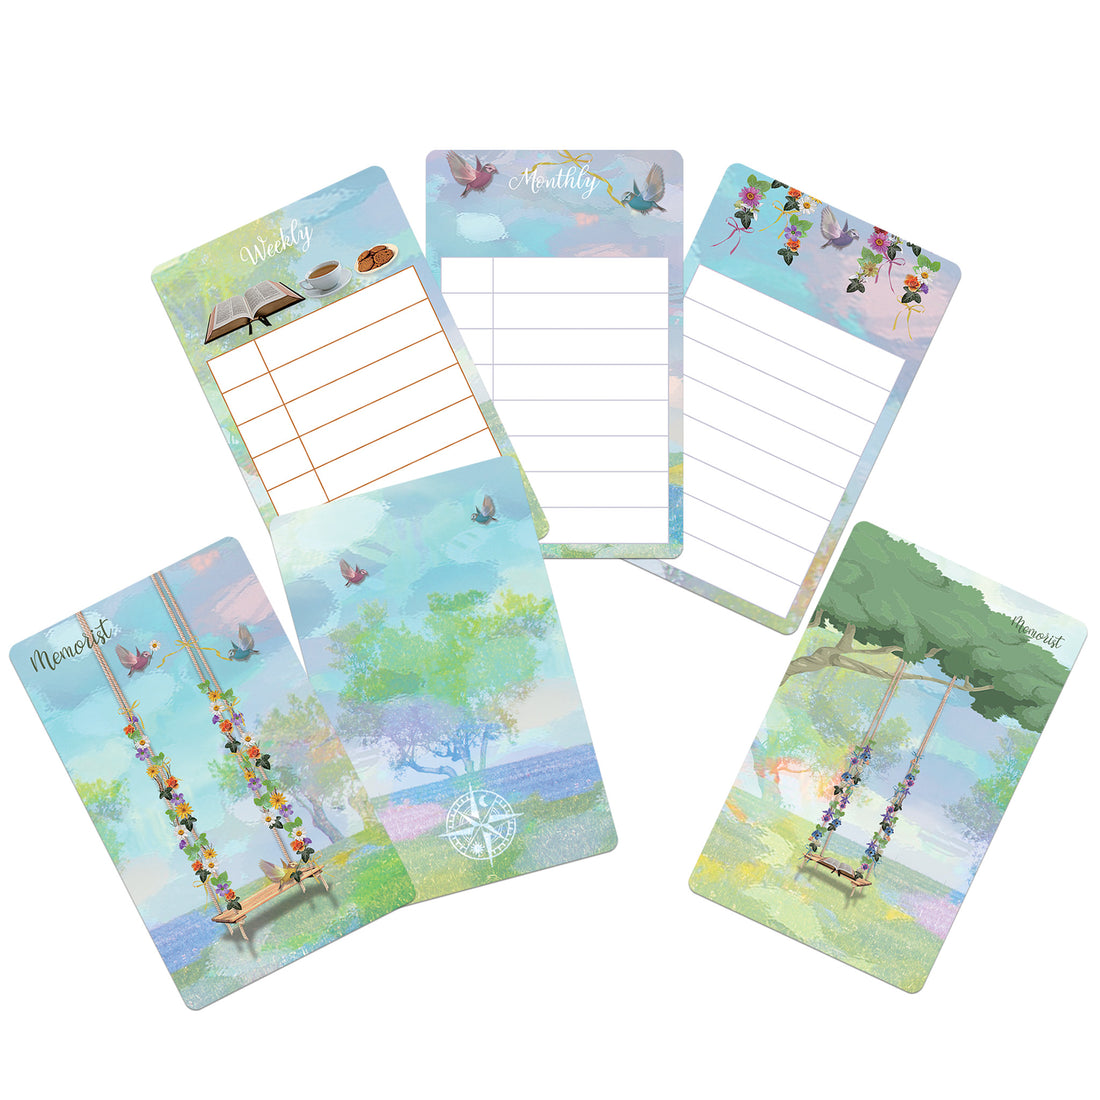 Decoration Card【Spring Swing】